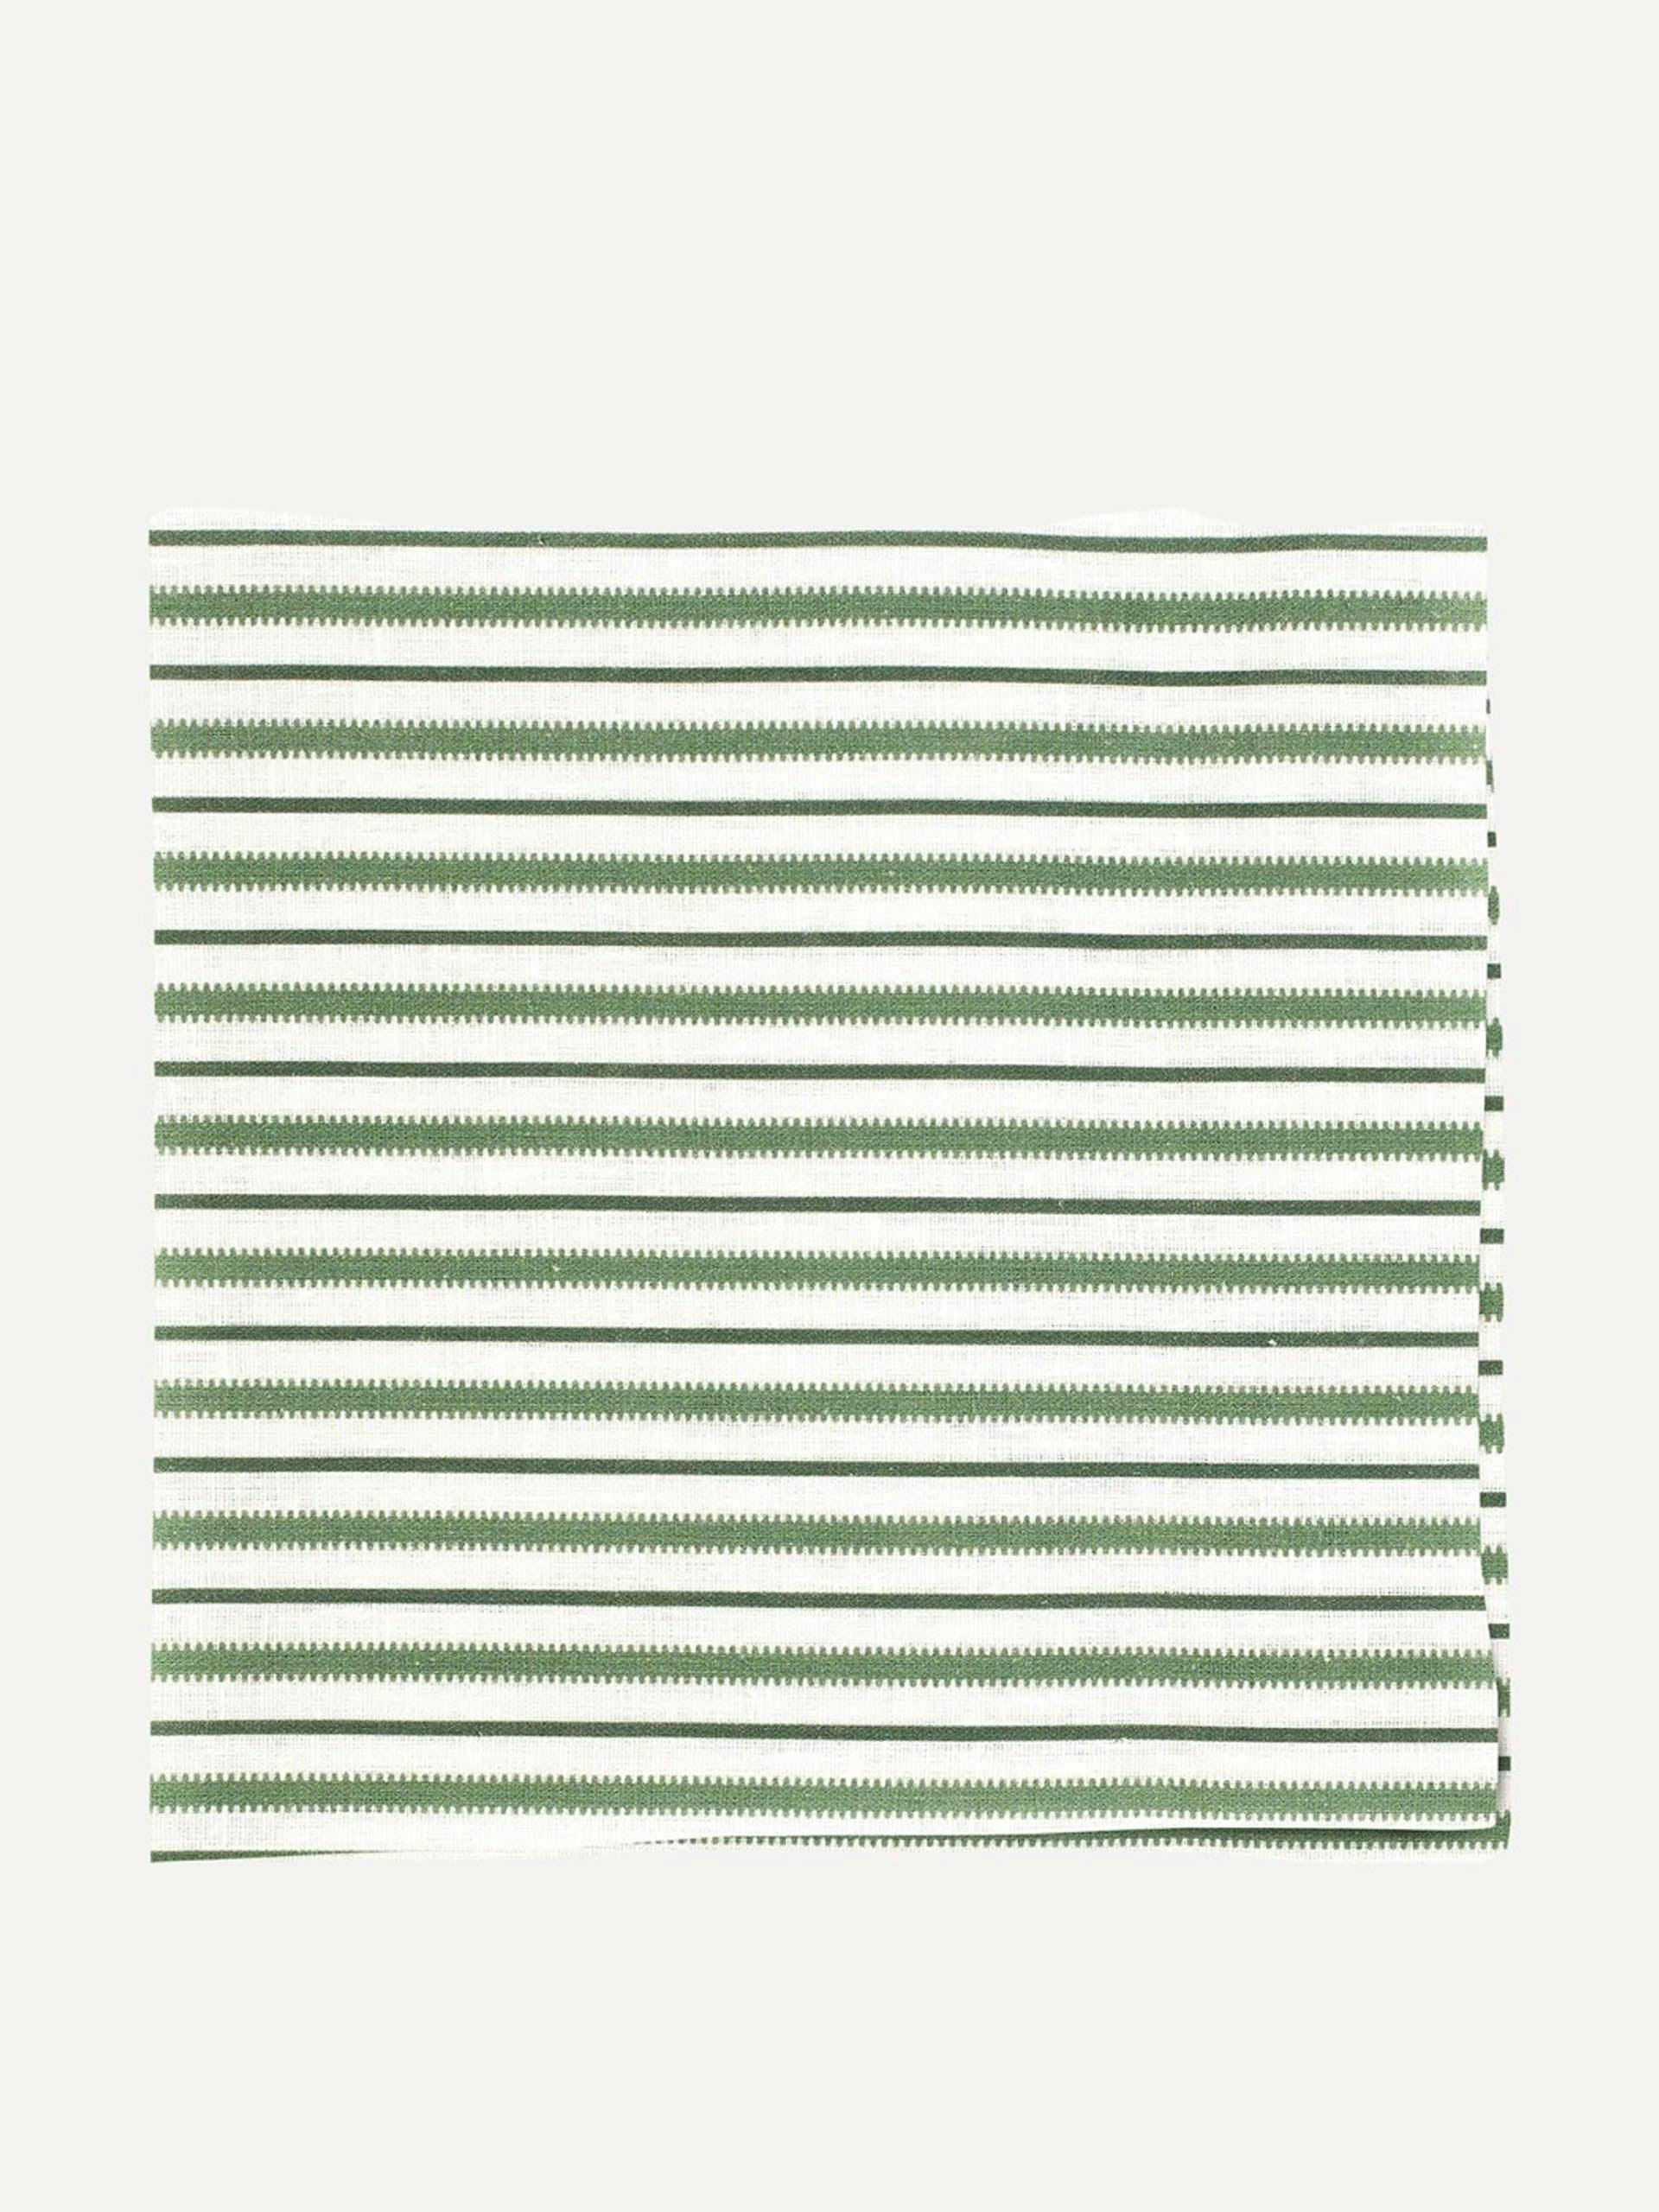 Victoria striped linen napkin in fir green